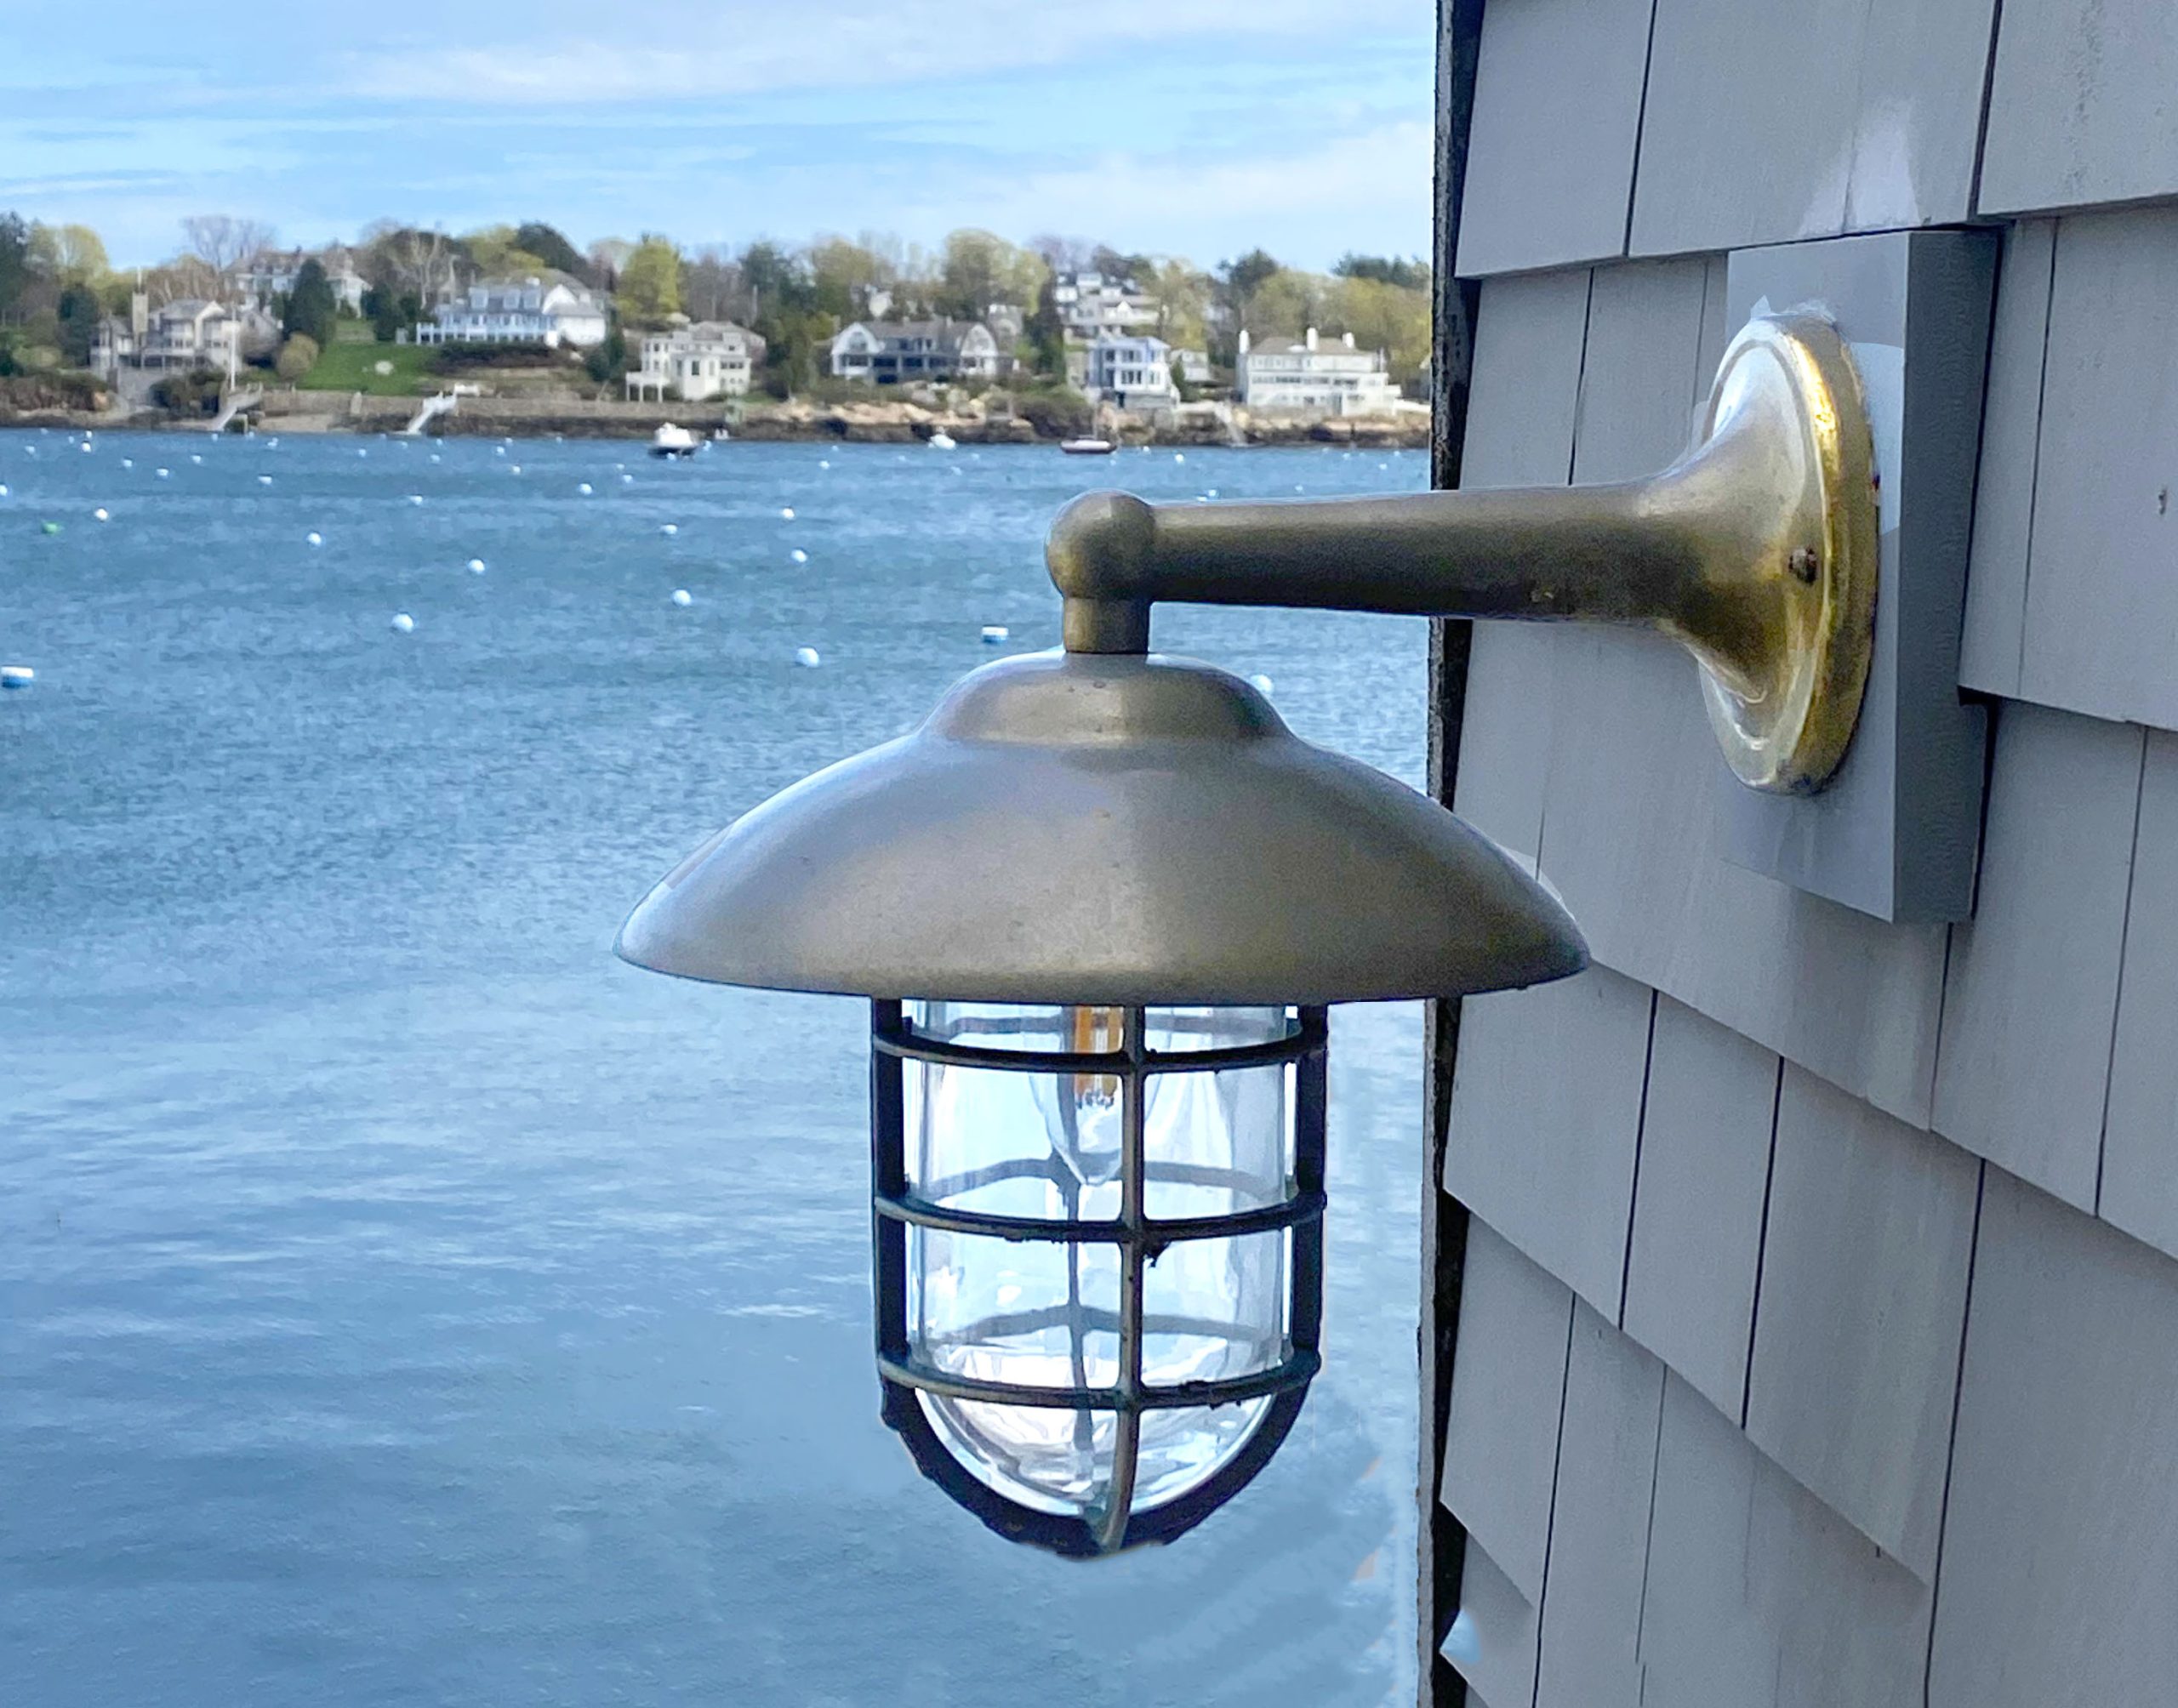 Nautical Bulkhead Brass Exterior Light Frosted Glass Shade Patio Porch